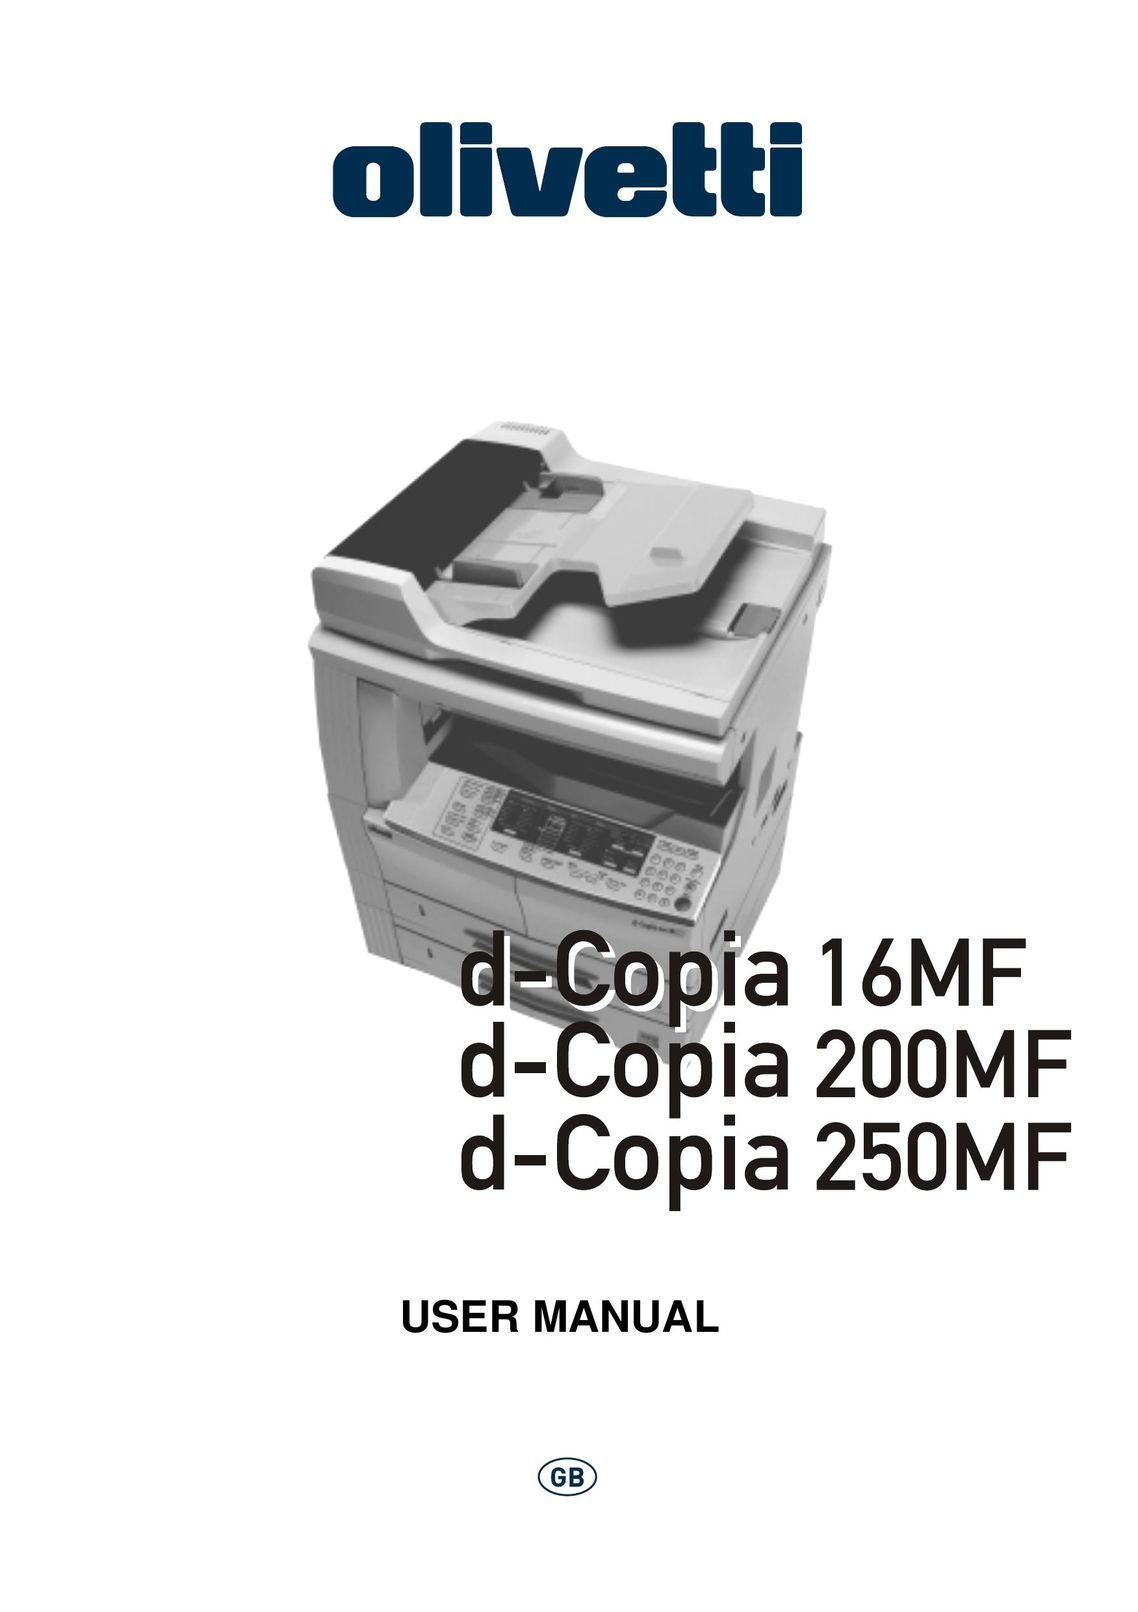 Olivetti 250MF Printer User Manual